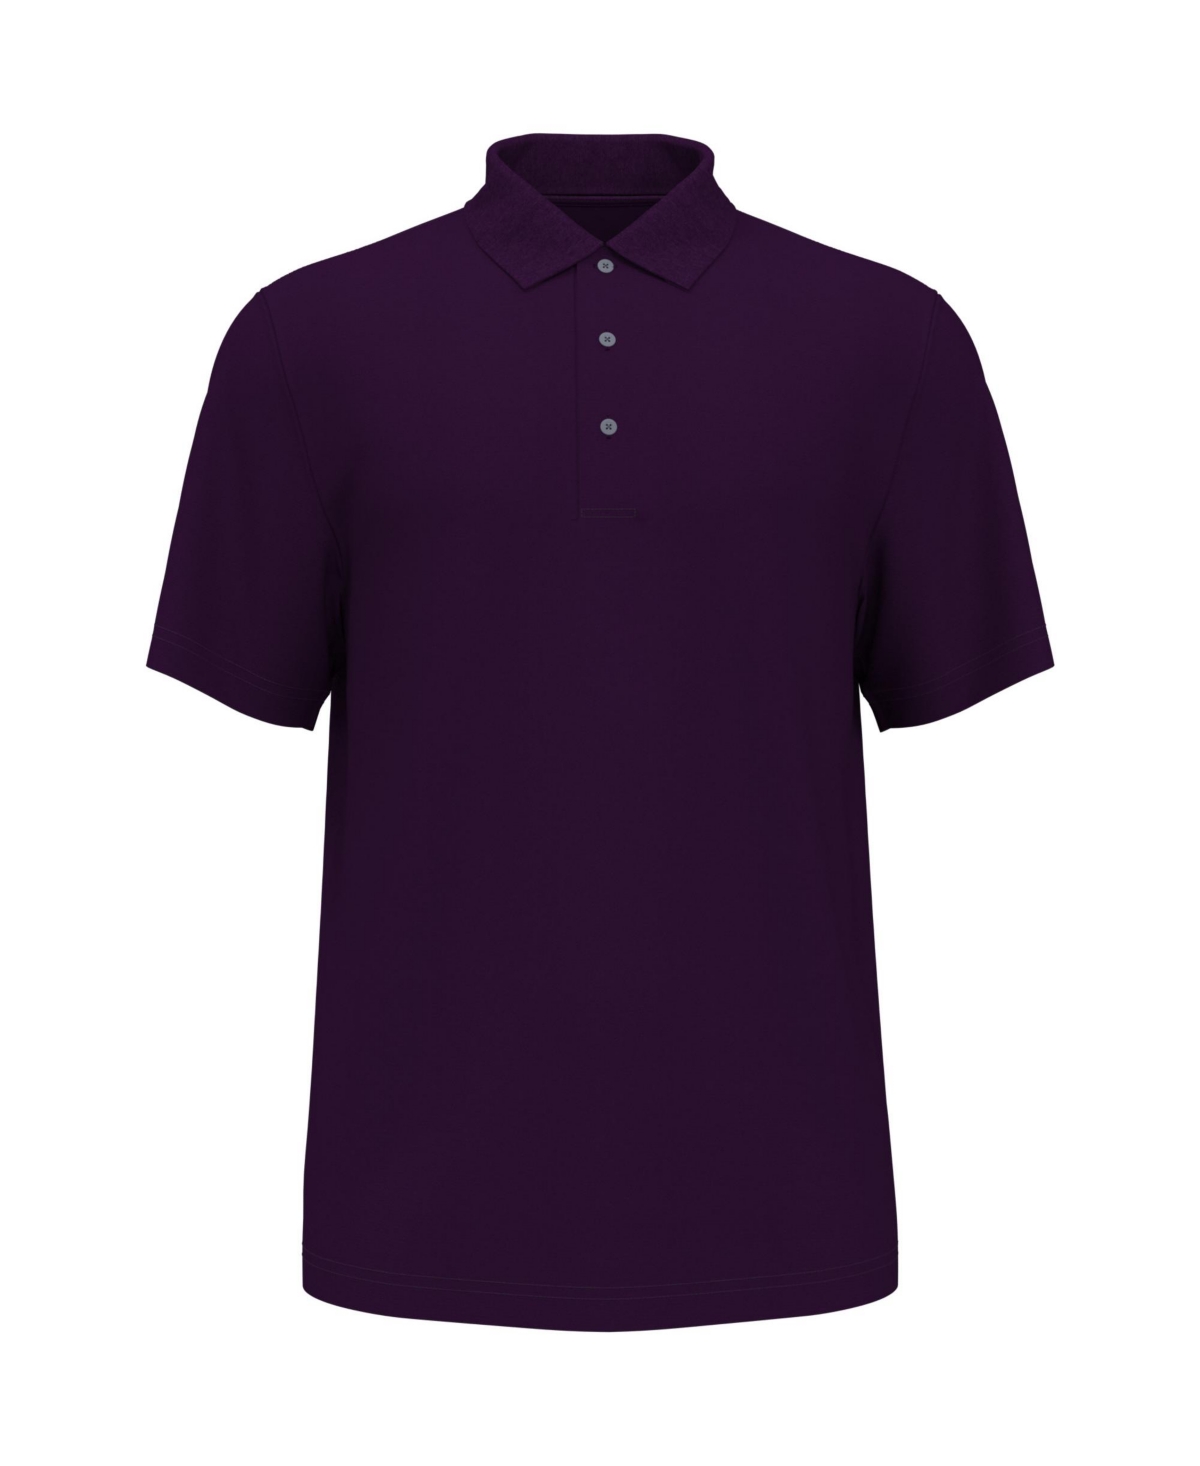 Pga Tour Kids' Big Boys Airflux Solid Mesh Short Sleeves Golf Polo Shirt In Grape Royale